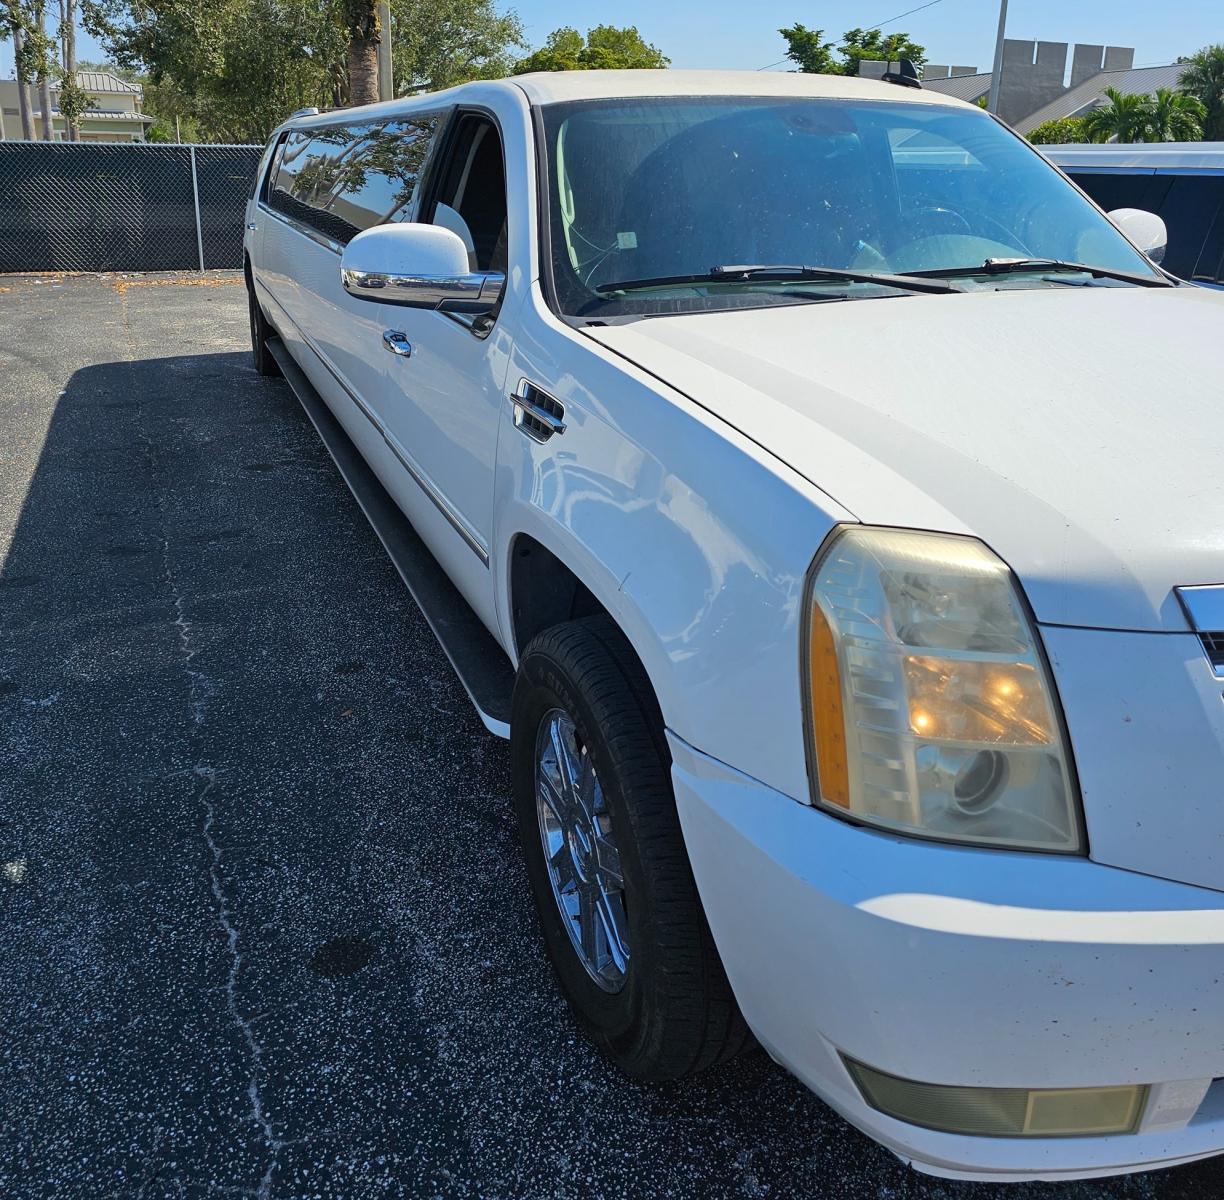 2008 White Cadillac Escalade , Automatic transmission, 0.000000, 0.000000 - 2008 160" Escalade Limo - Photo #1